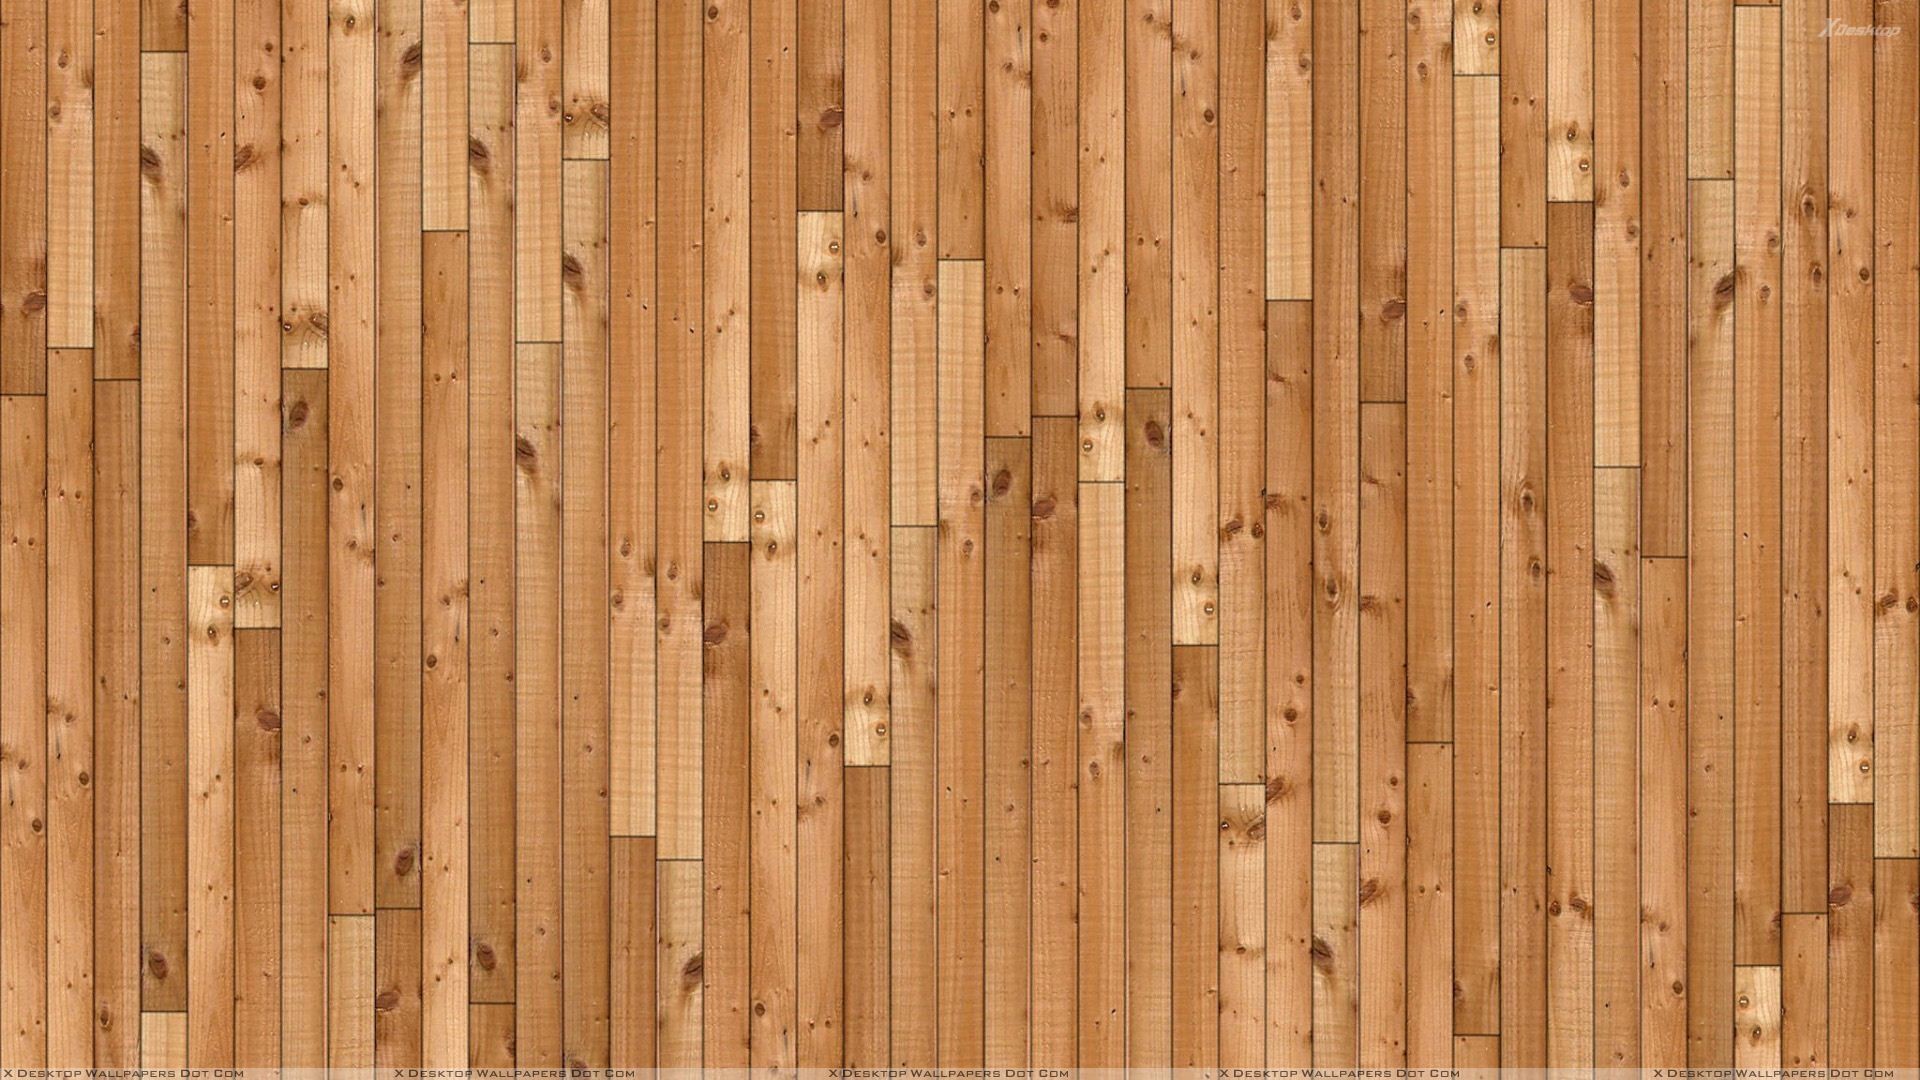 Asian hard wood